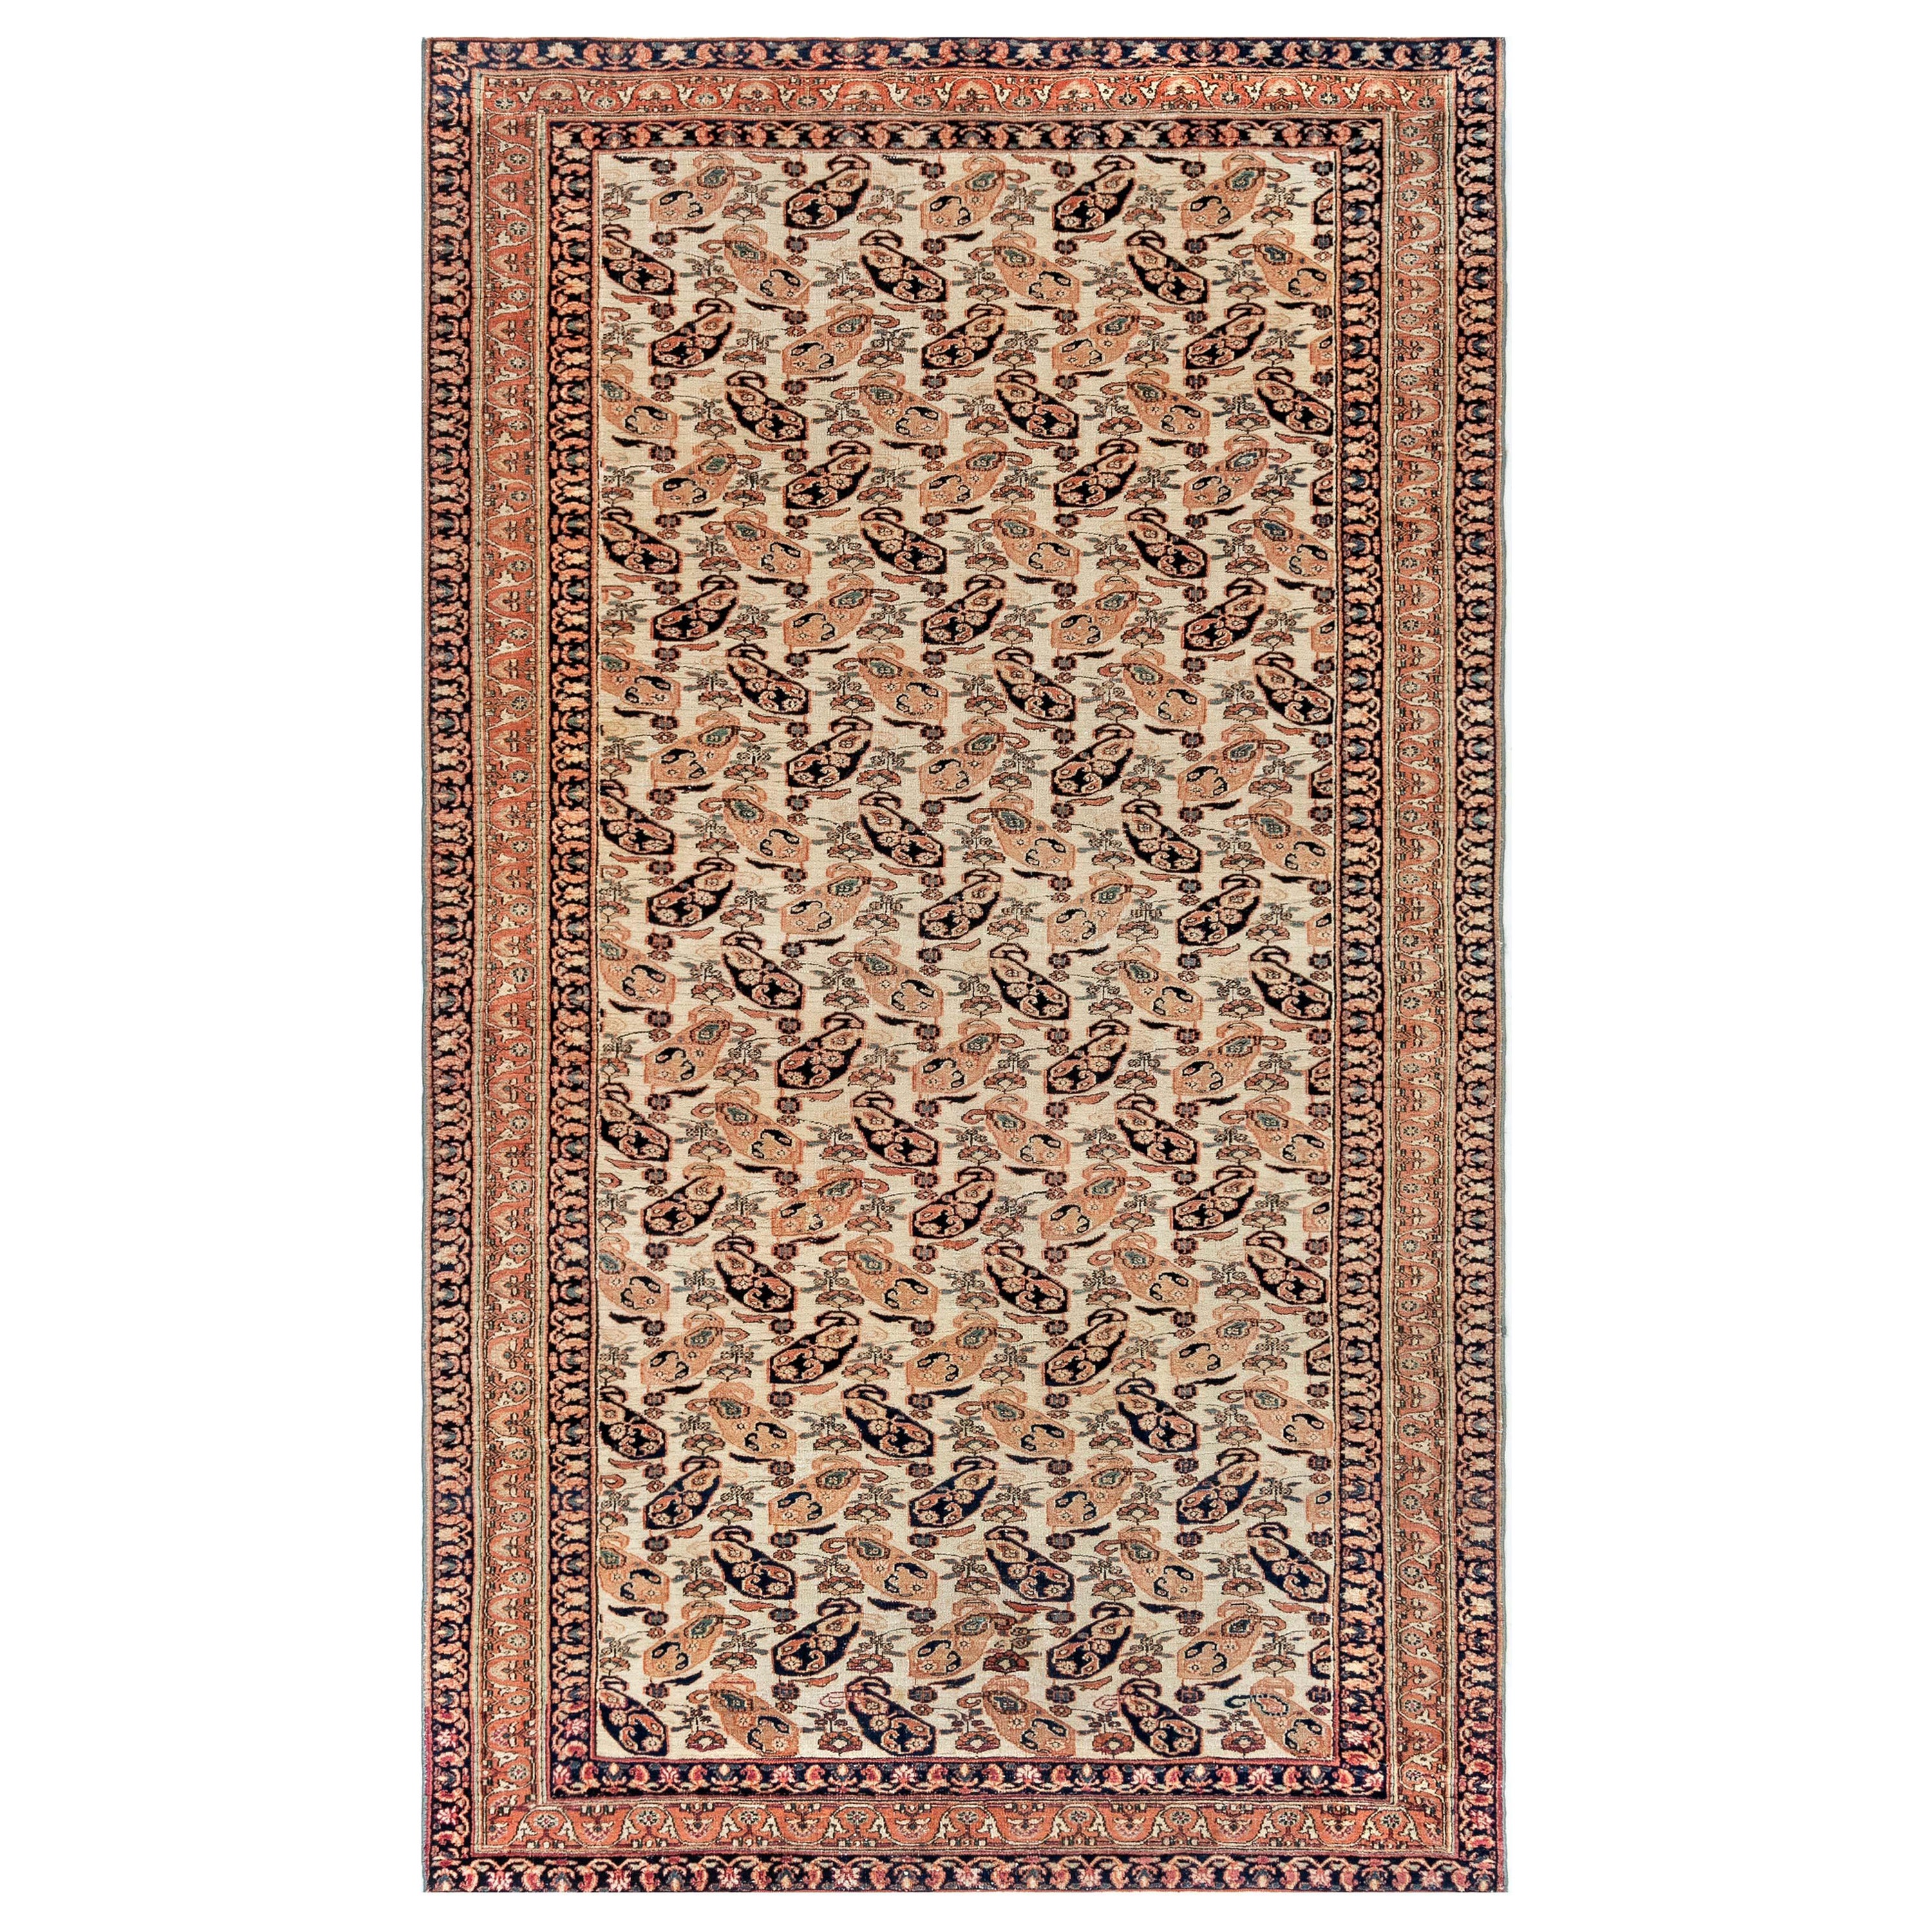 Early 20th Century Persian Tabriz Handmade Wool Rug